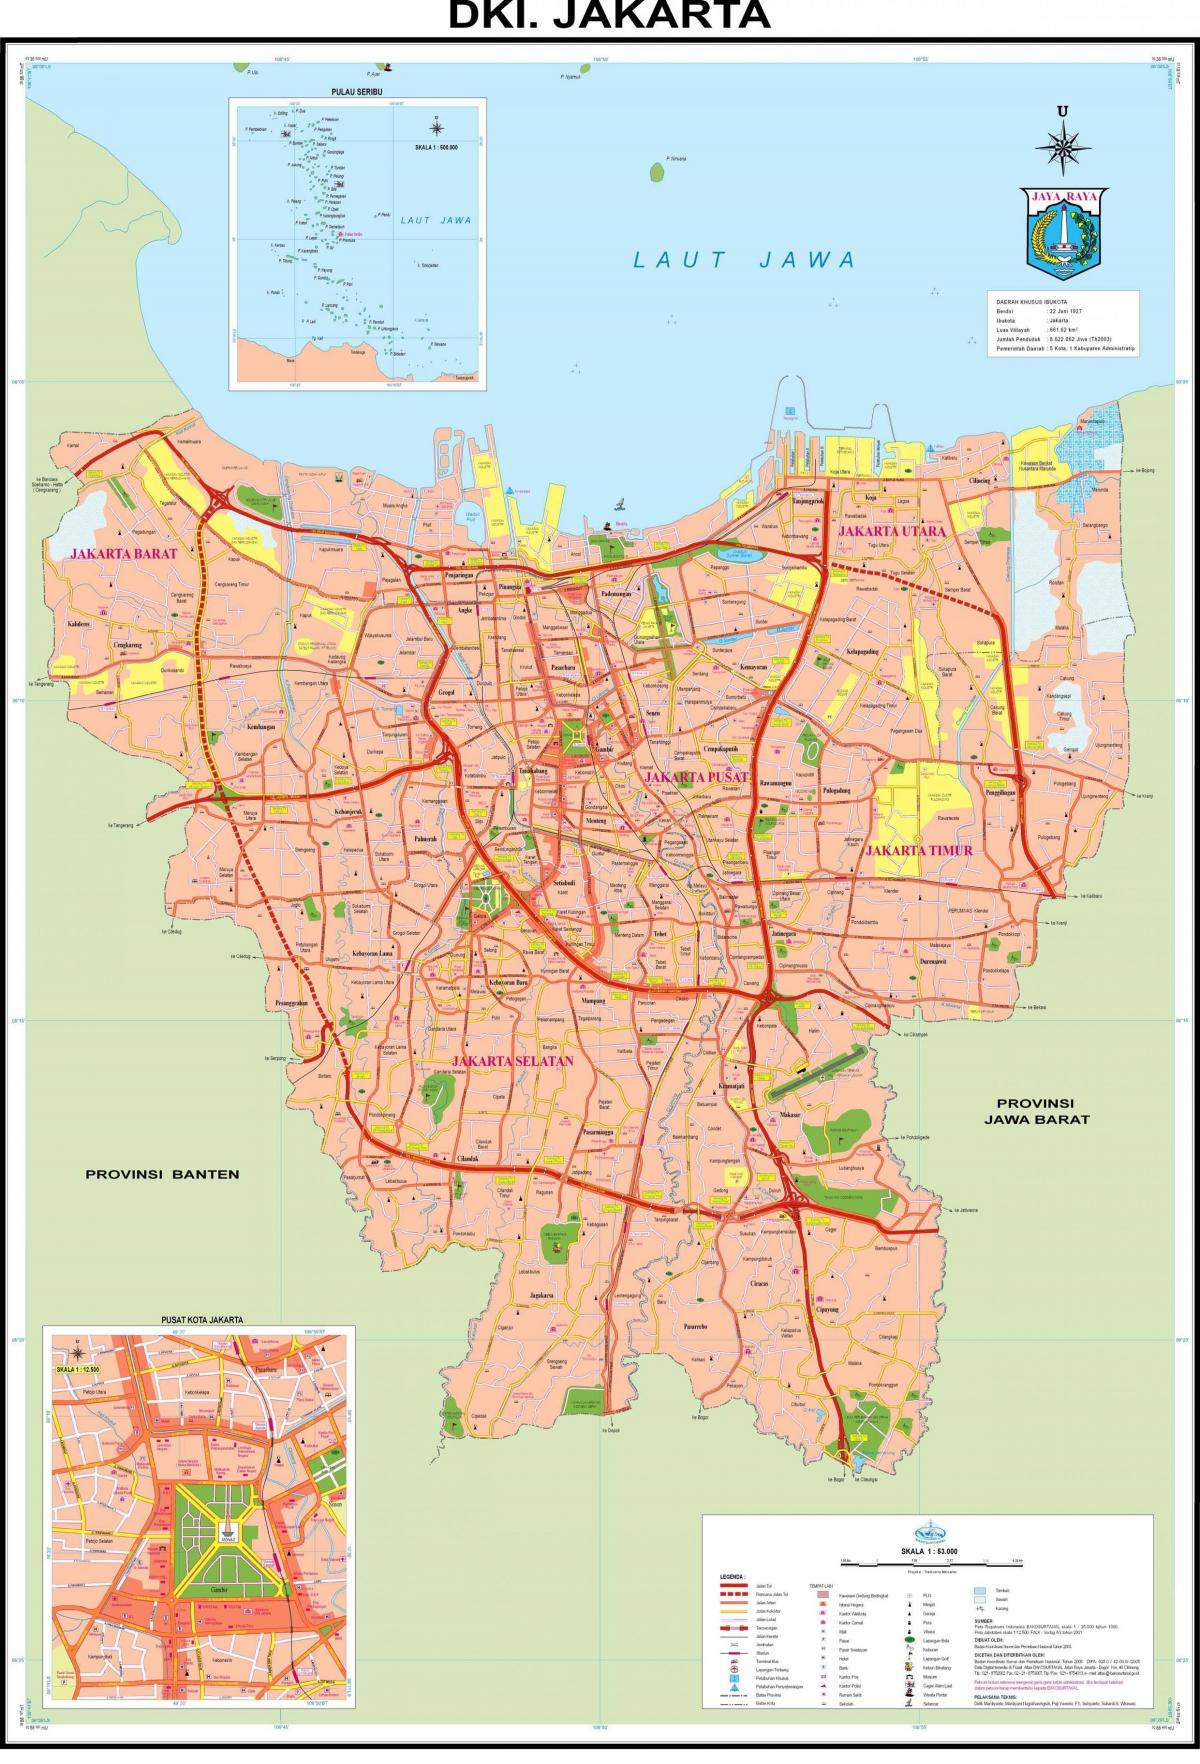 Jakarta city-kart